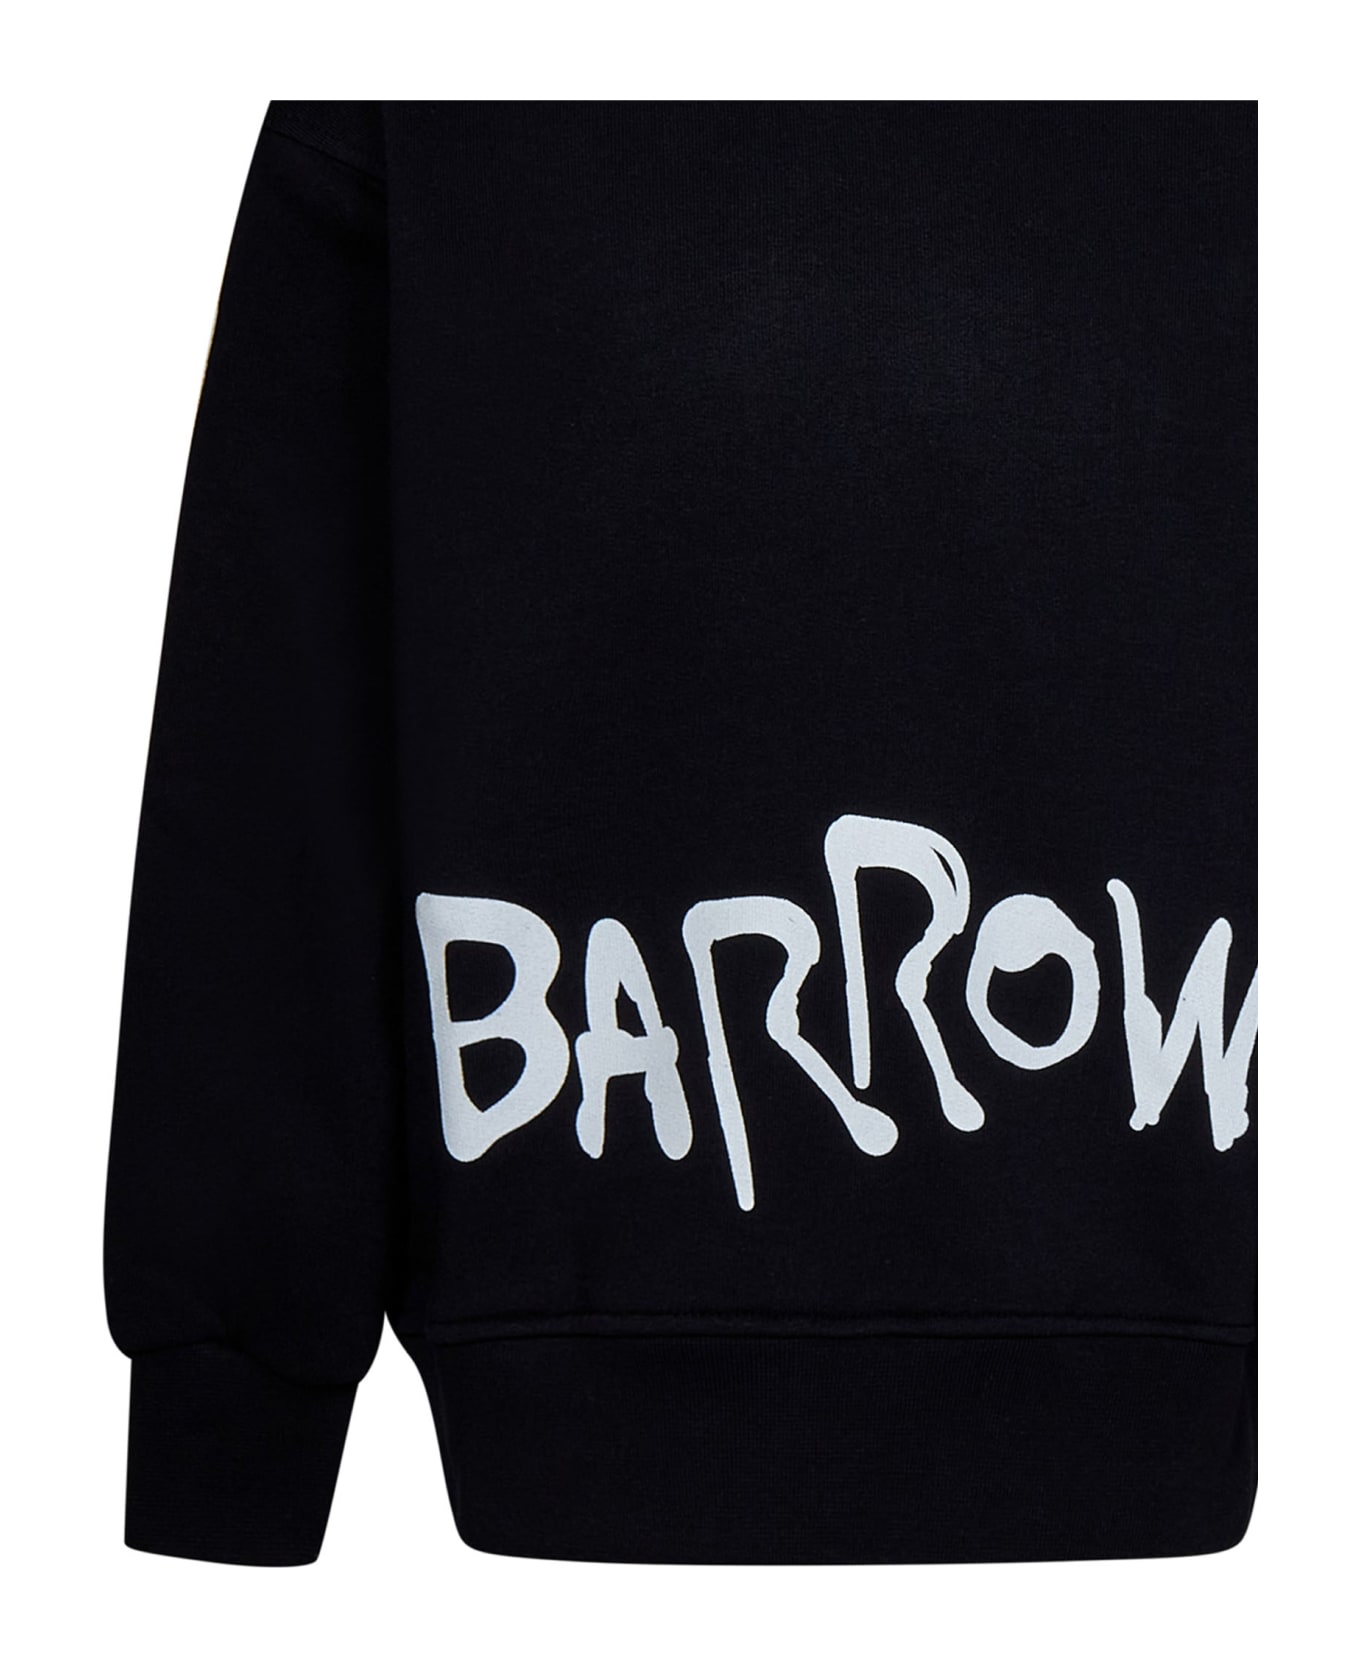 Barrow Sweatshirt - Nero/black